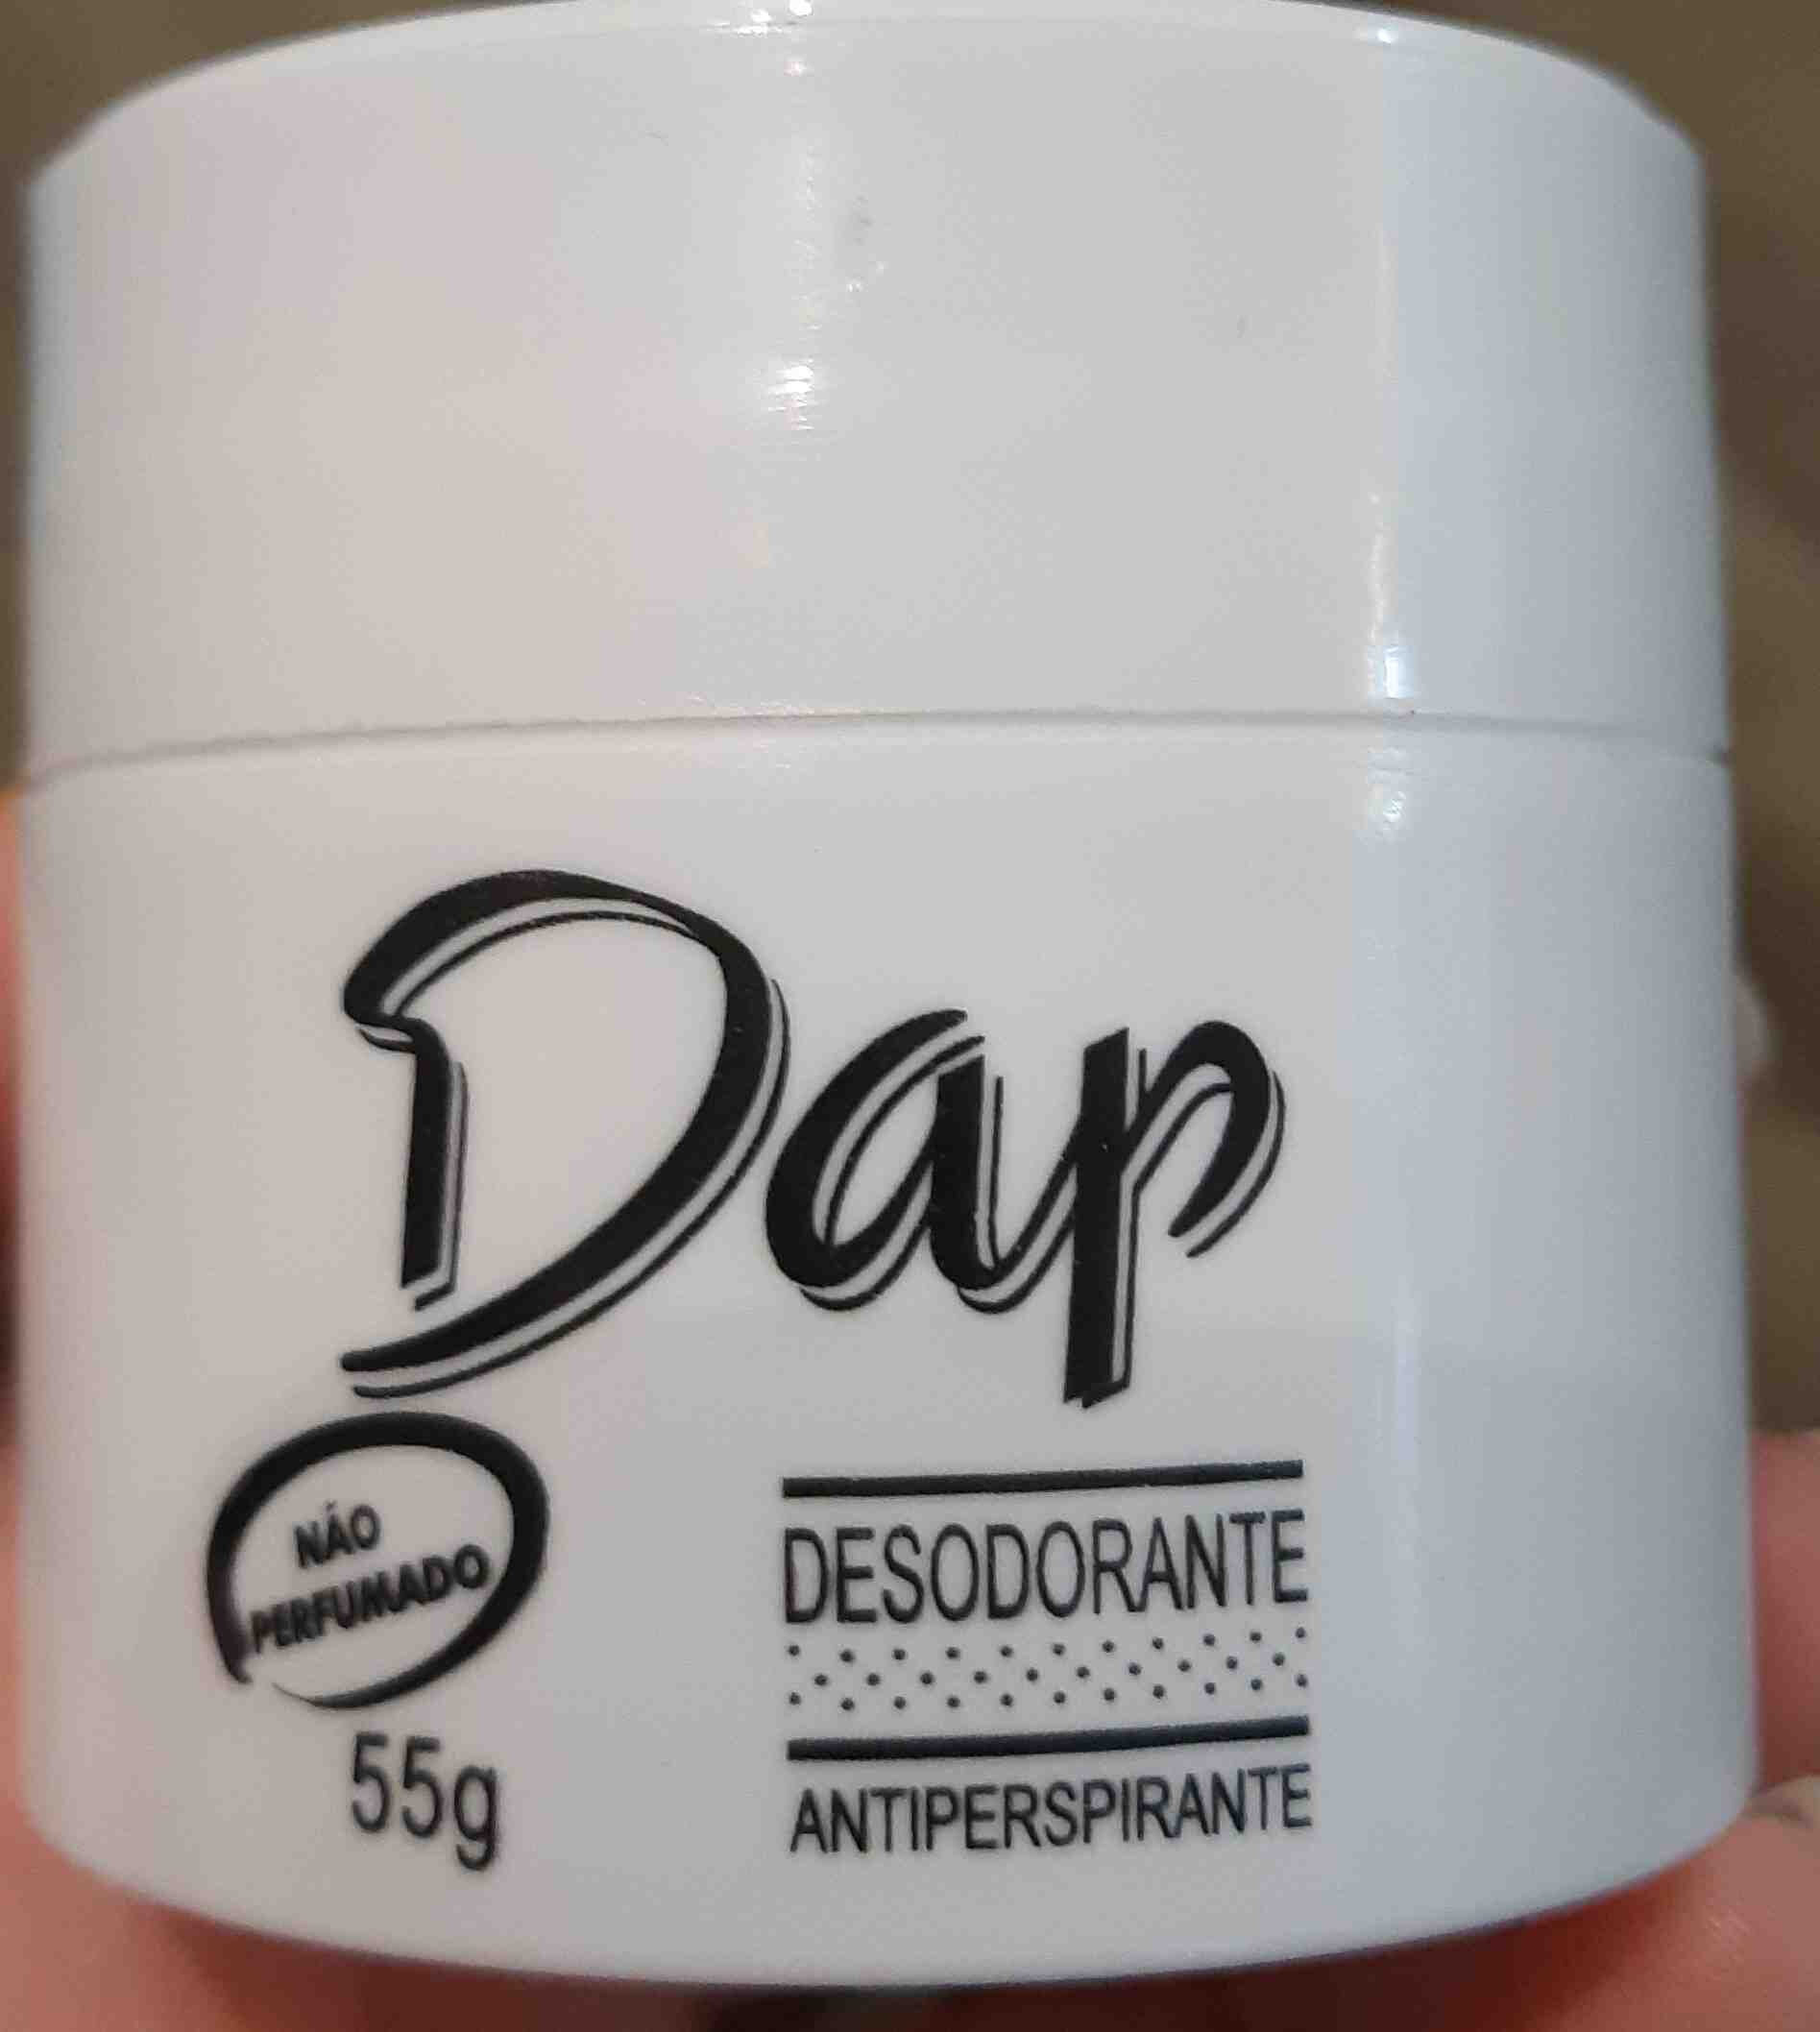 Dap desodorante - Produit - en